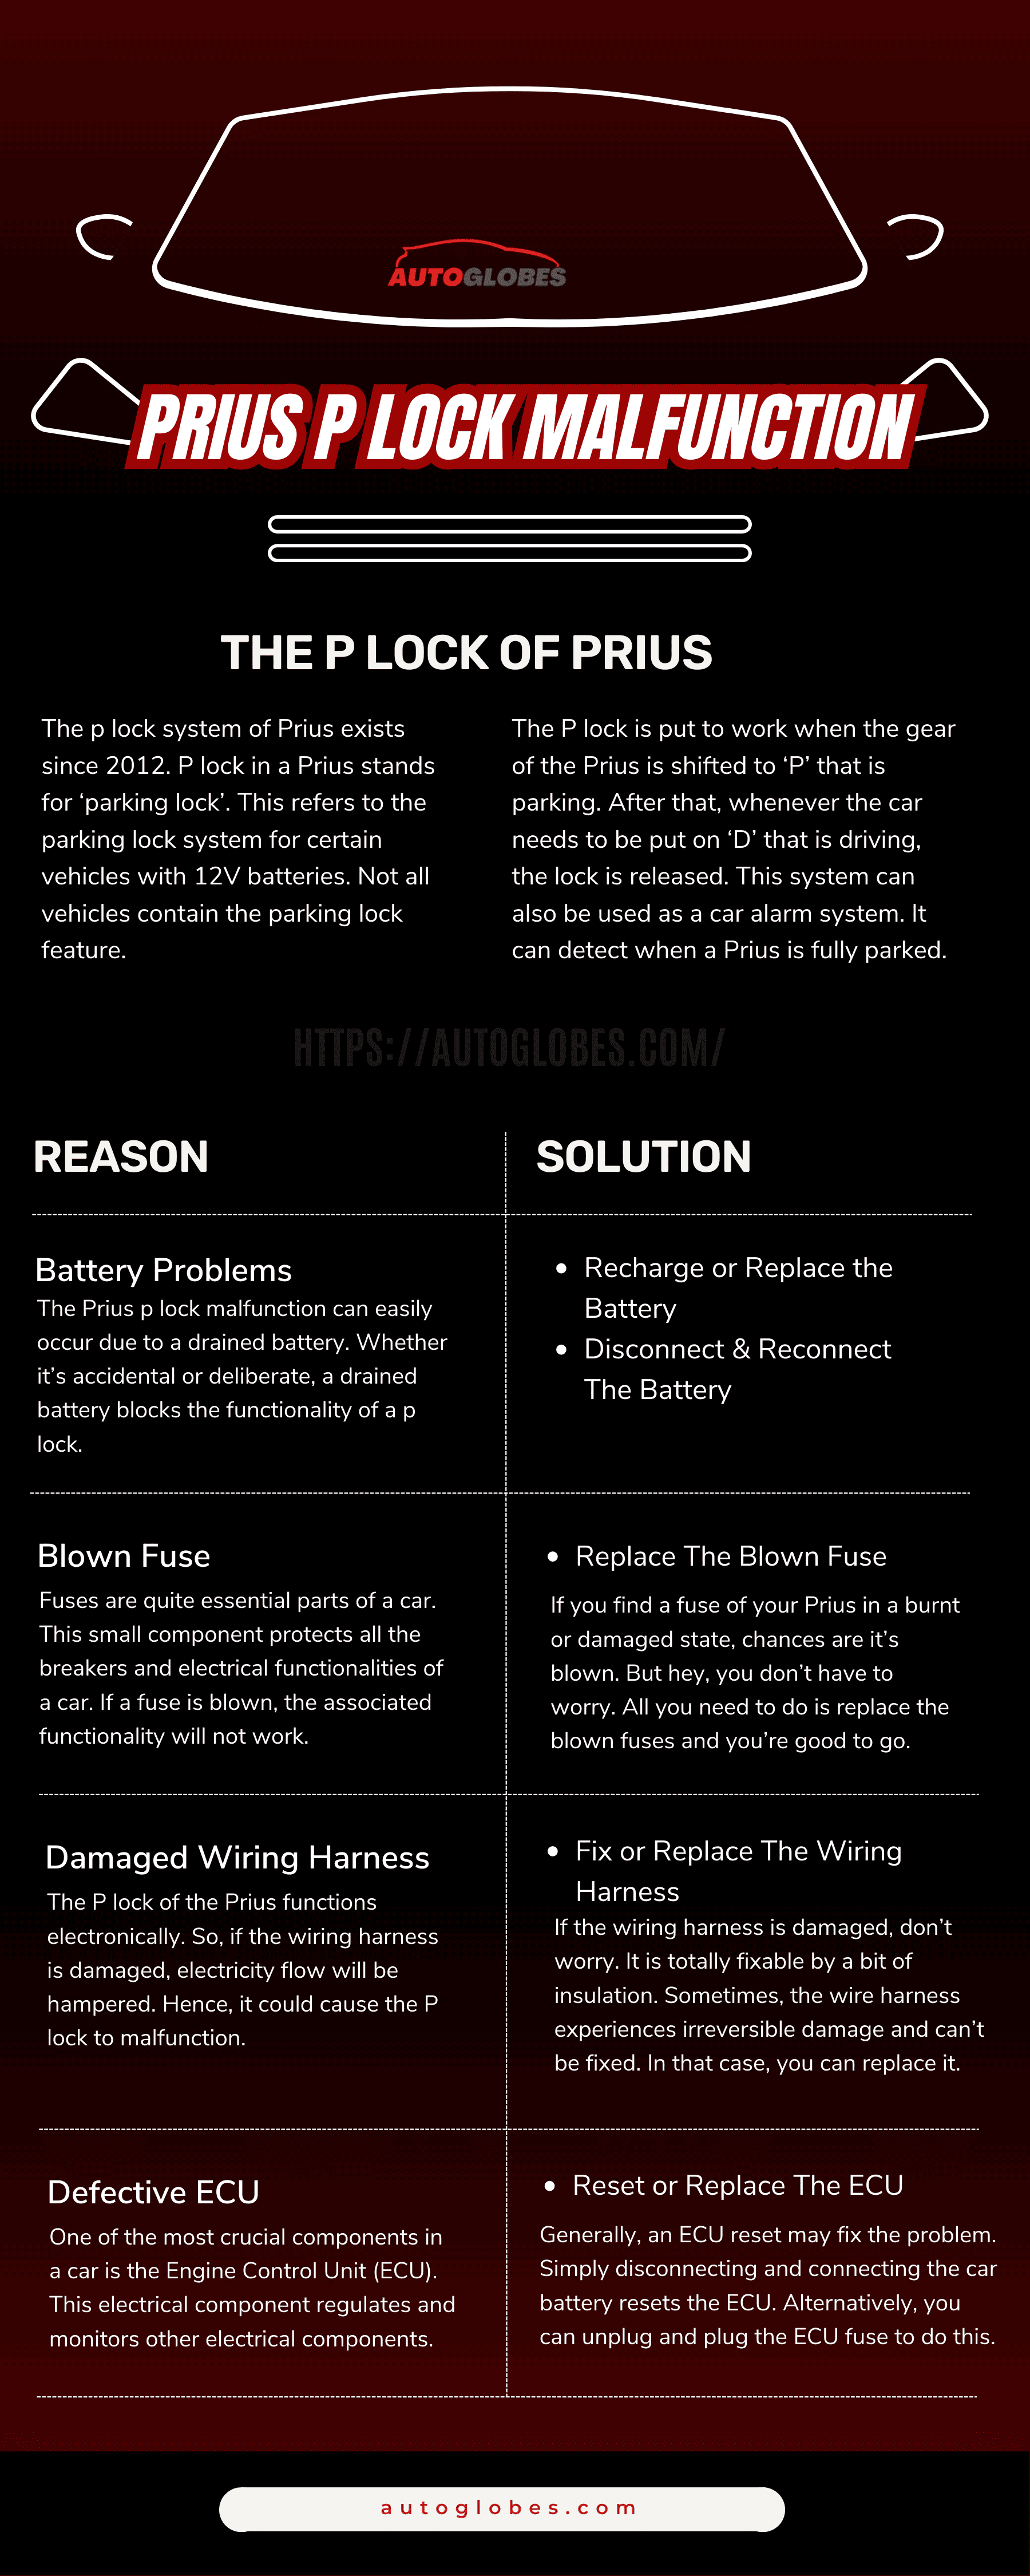 Prius P Lock Malfunction Infographic